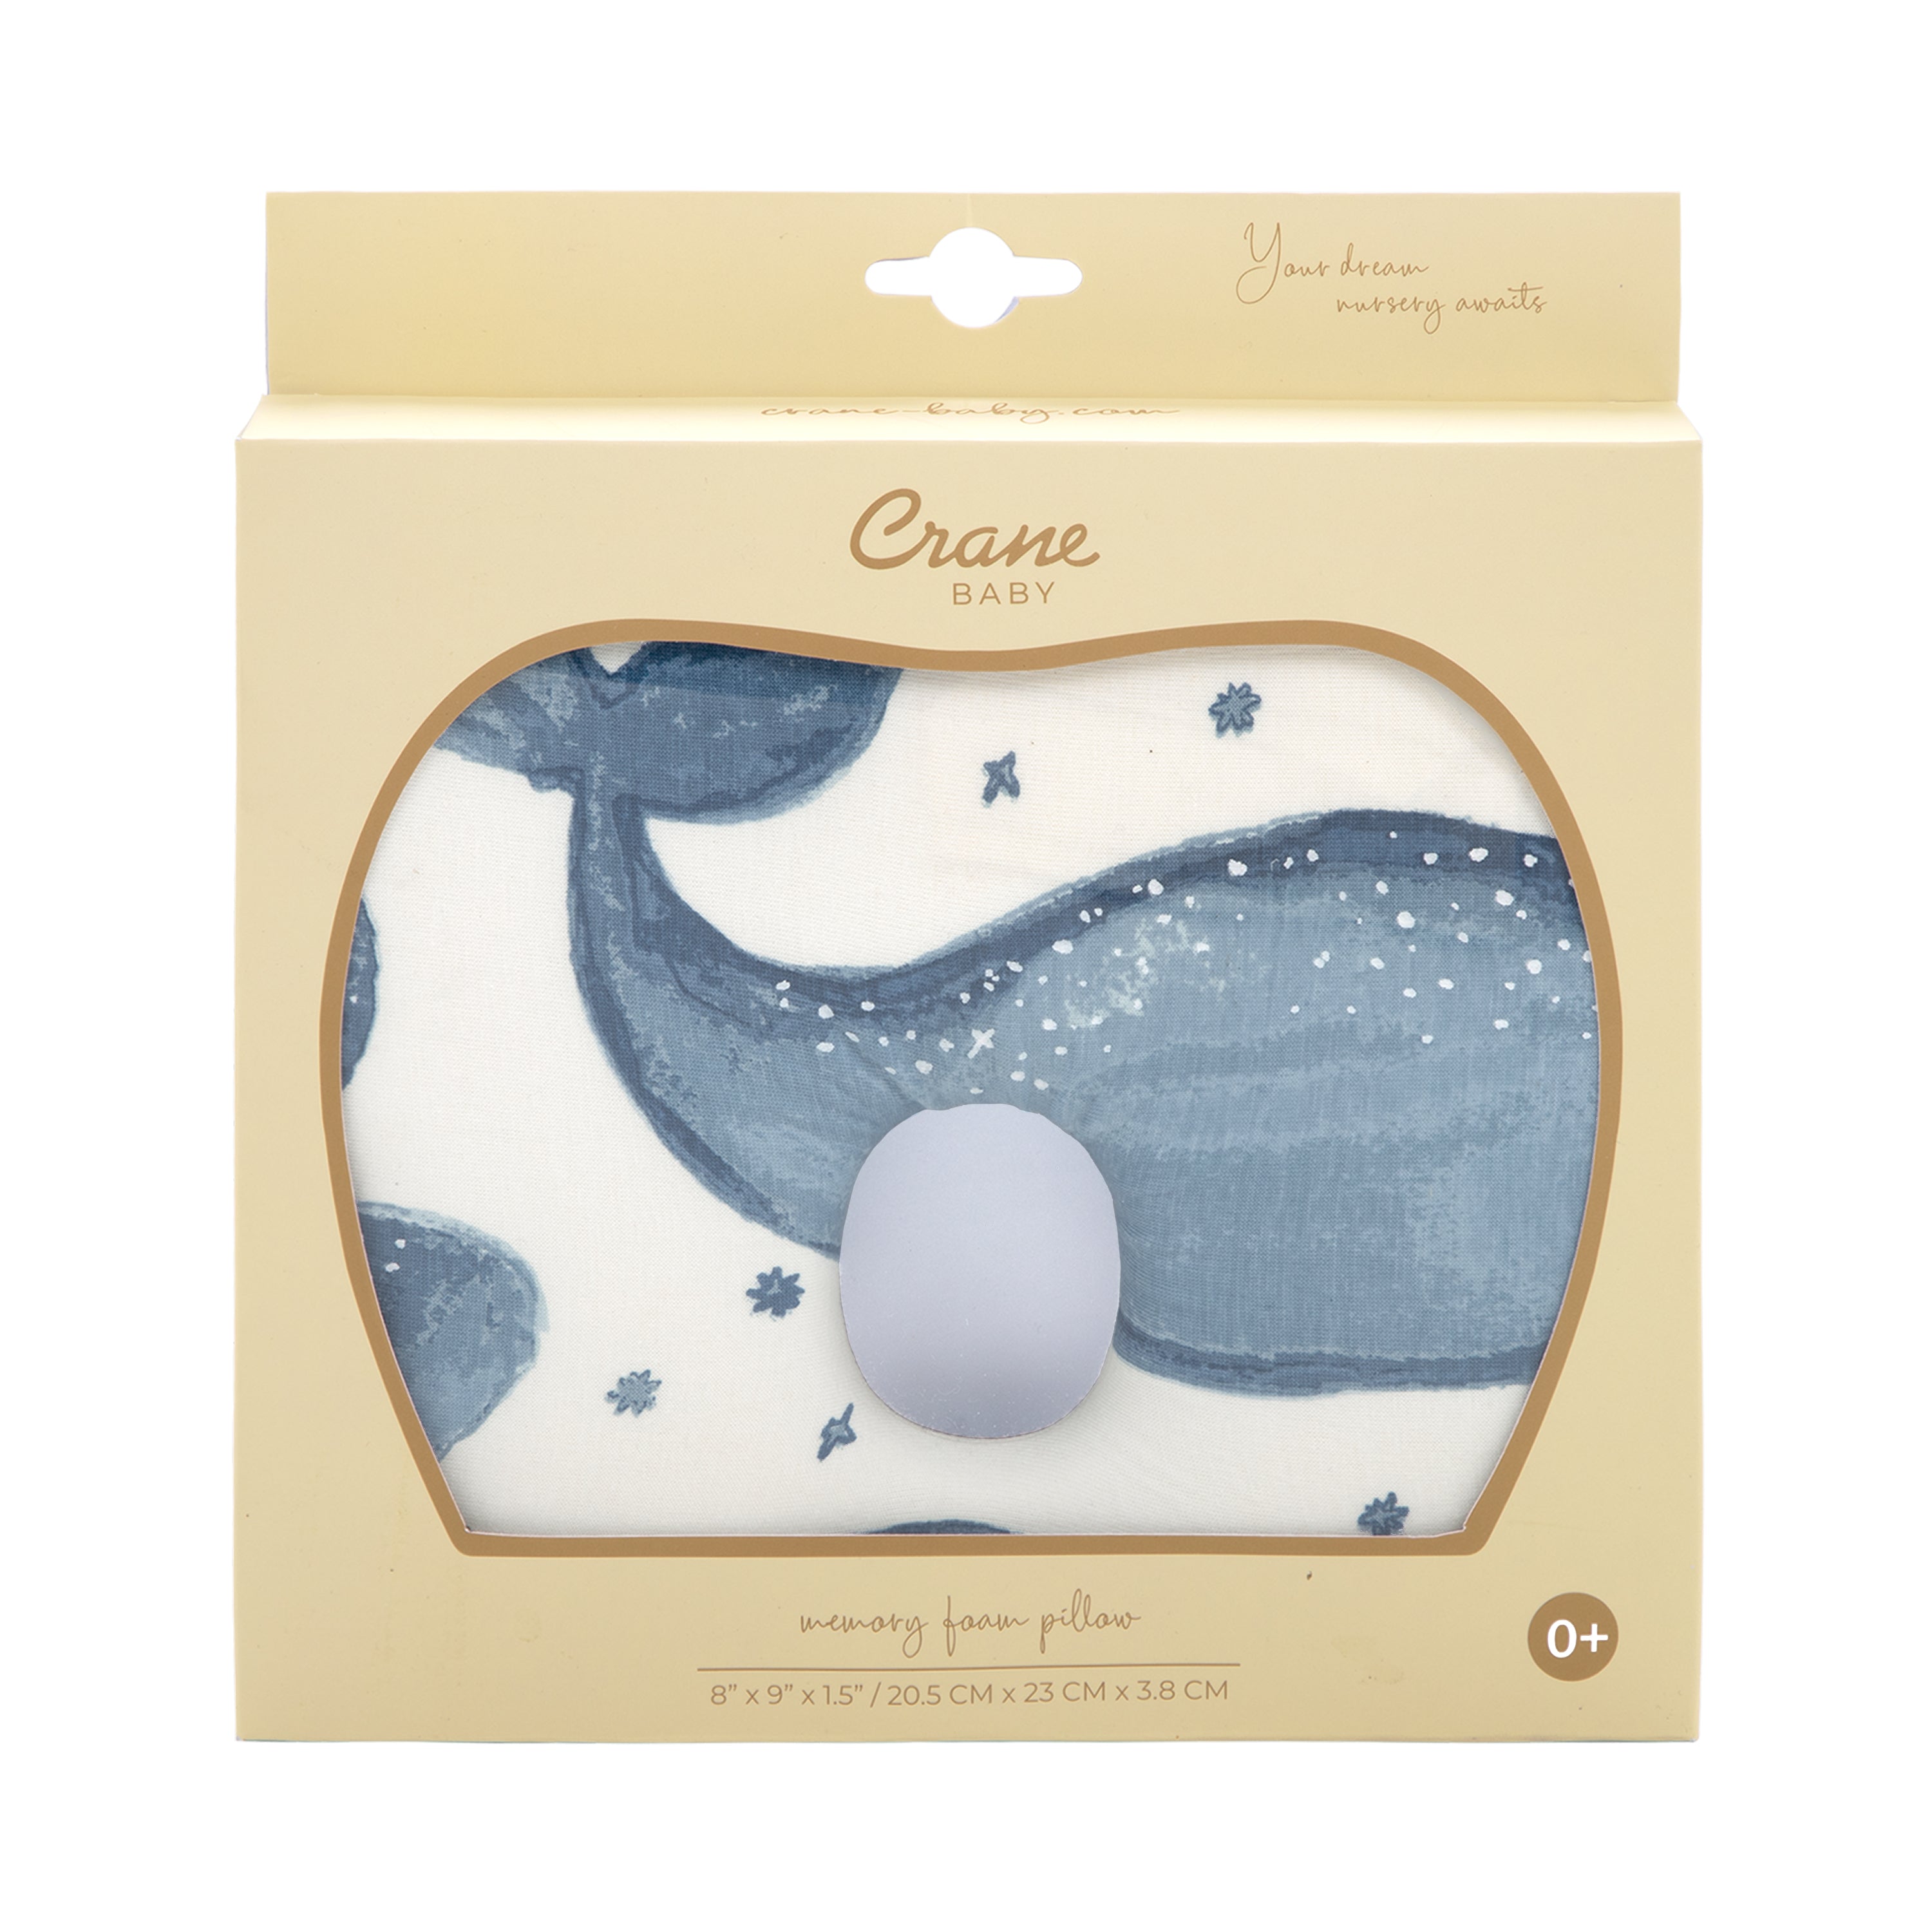 Crane Baby Memory Foam Pillow Caspian Collection - Blue